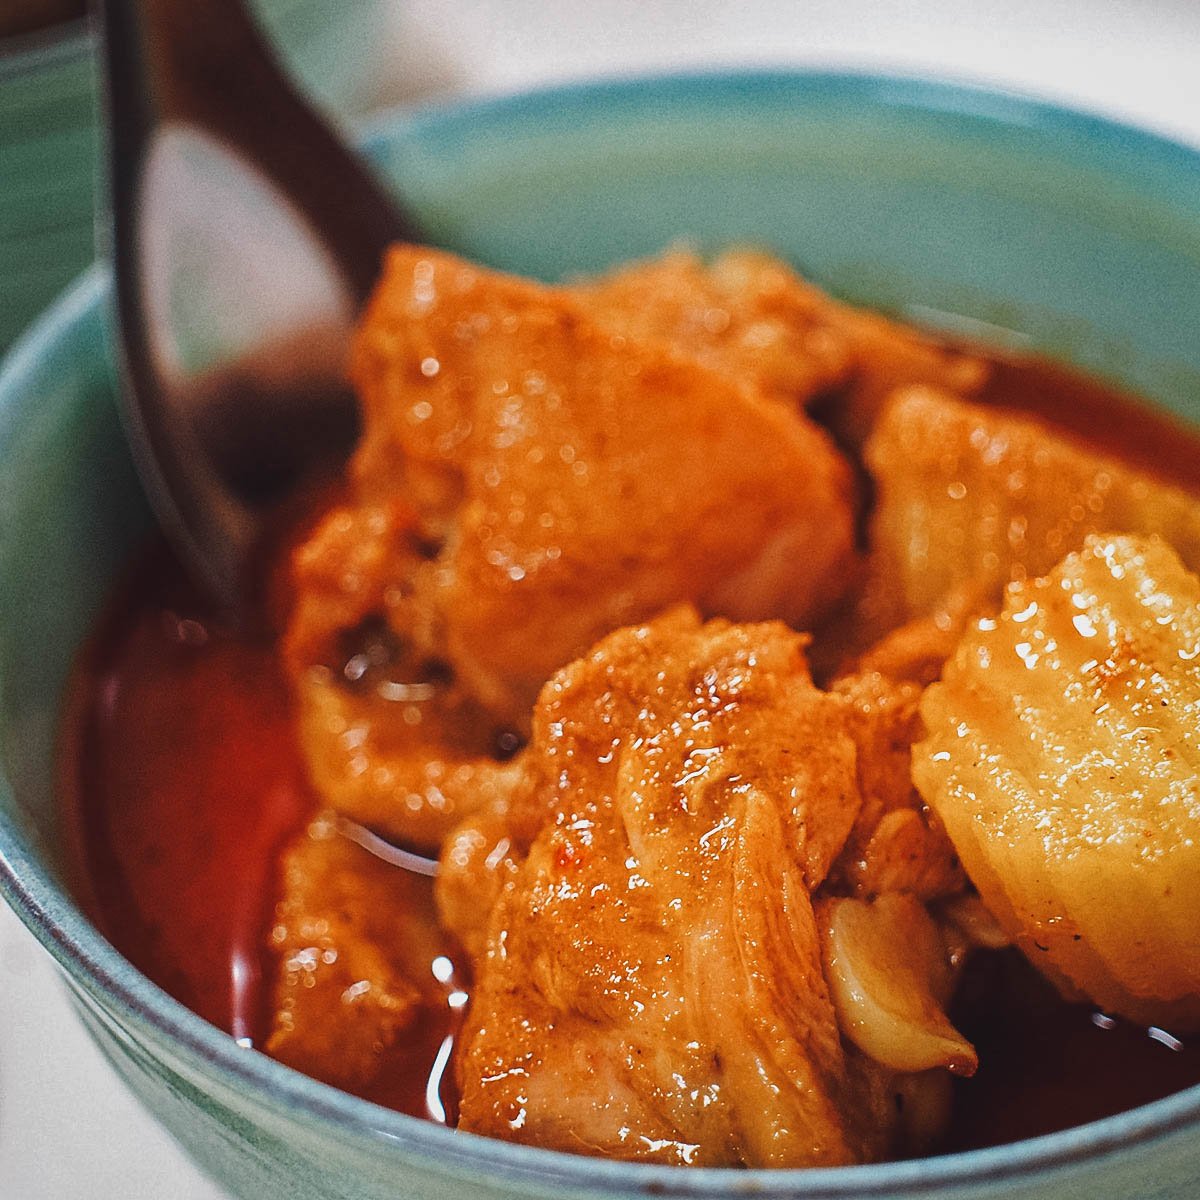 Massaman curry, a popular Thai food with Muslim influences